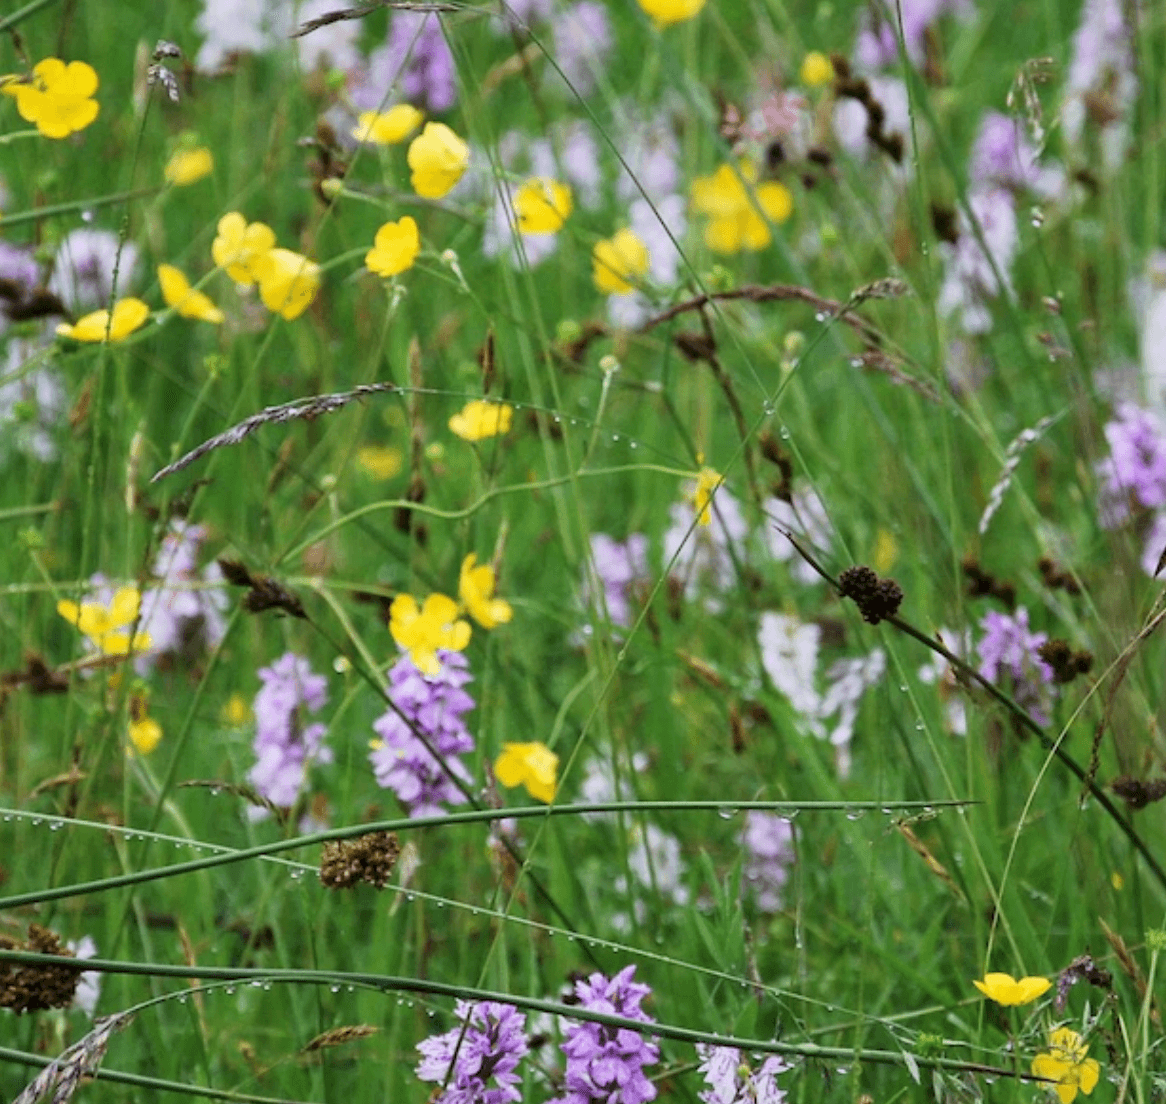 43m2 of Wildflowers, Wetlands and Wildlife Habitat Restored by Xander Kostroma in the UK